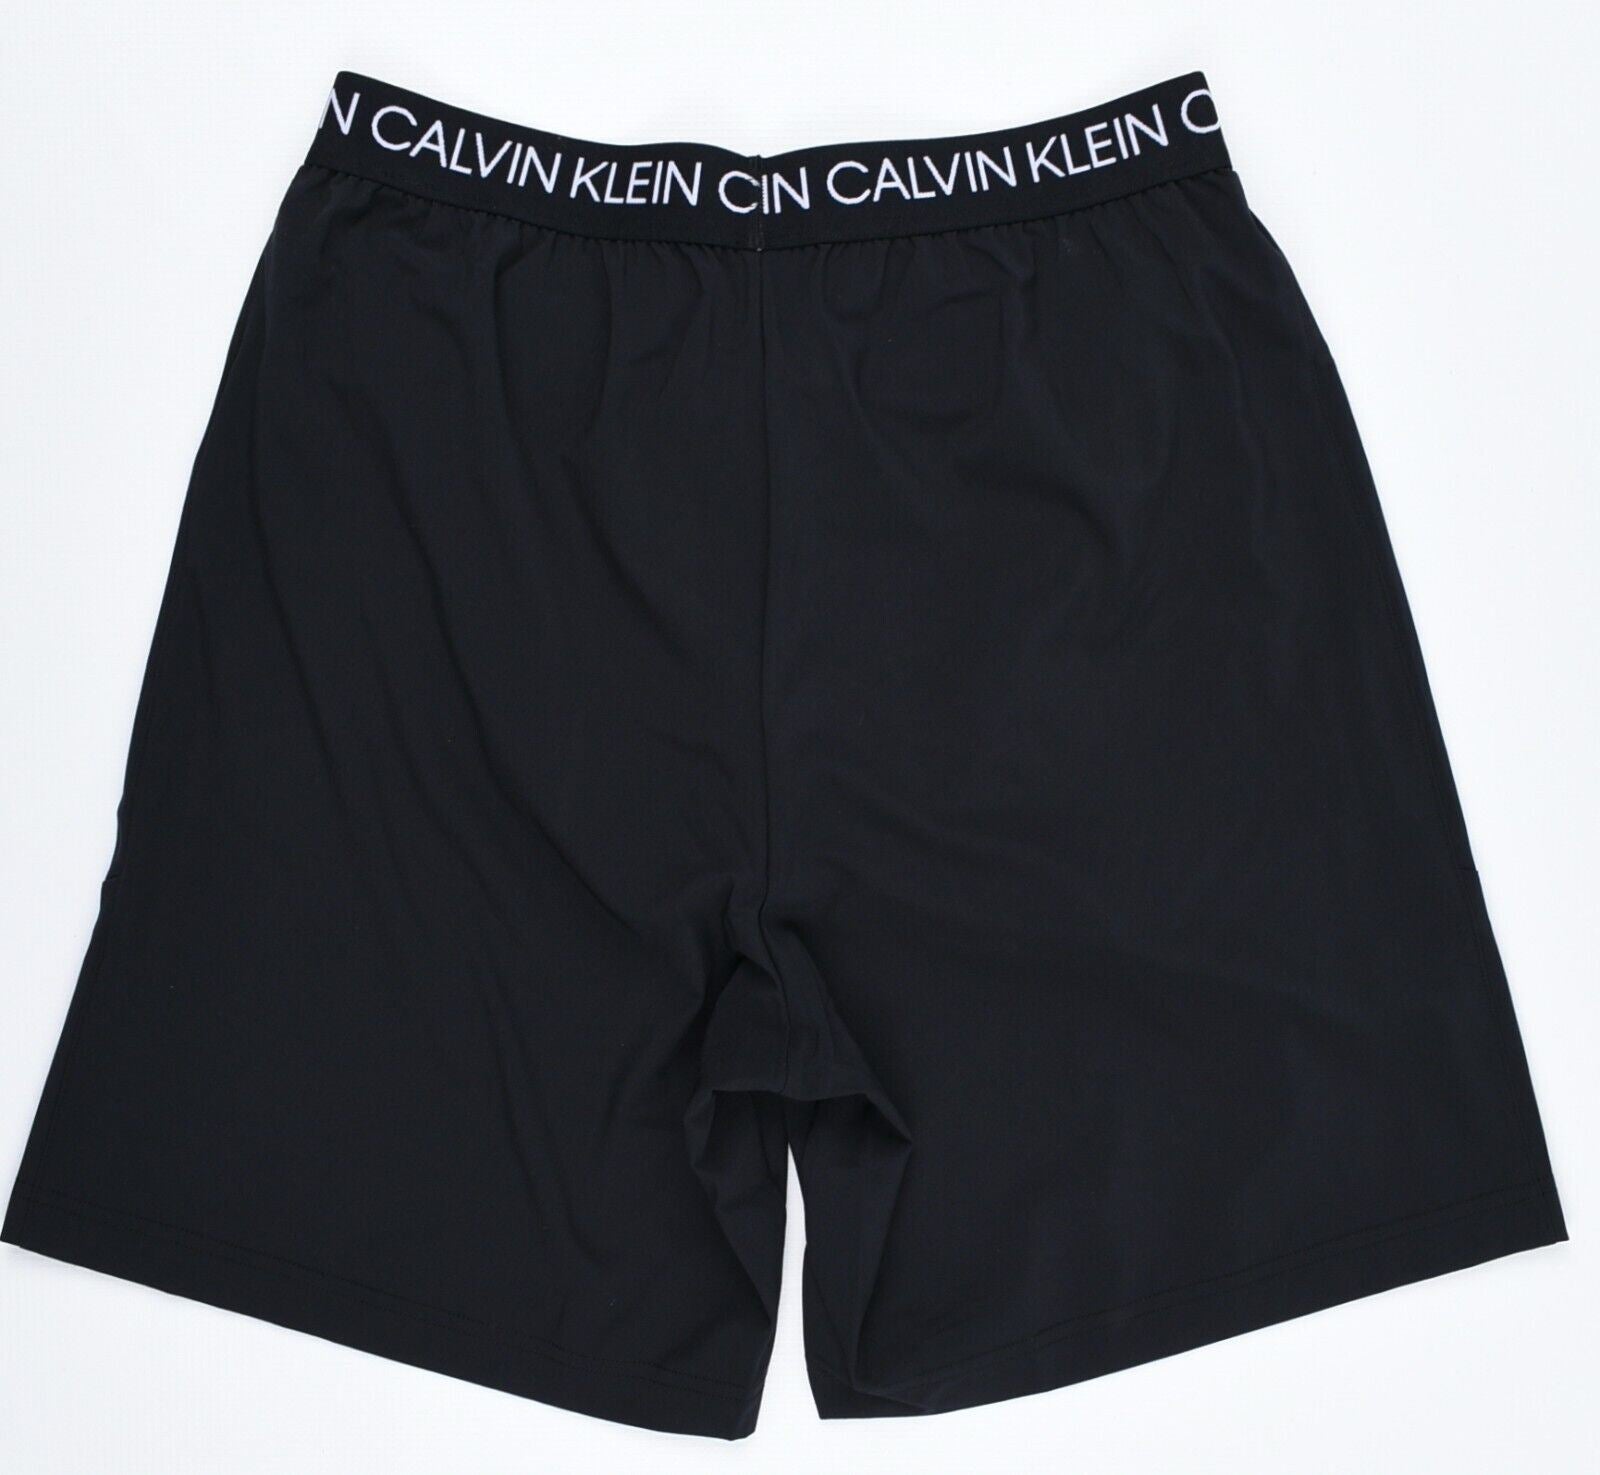 CALVIN KLEIN Performance:  Men's Essential Sports Shorts, Black, size M